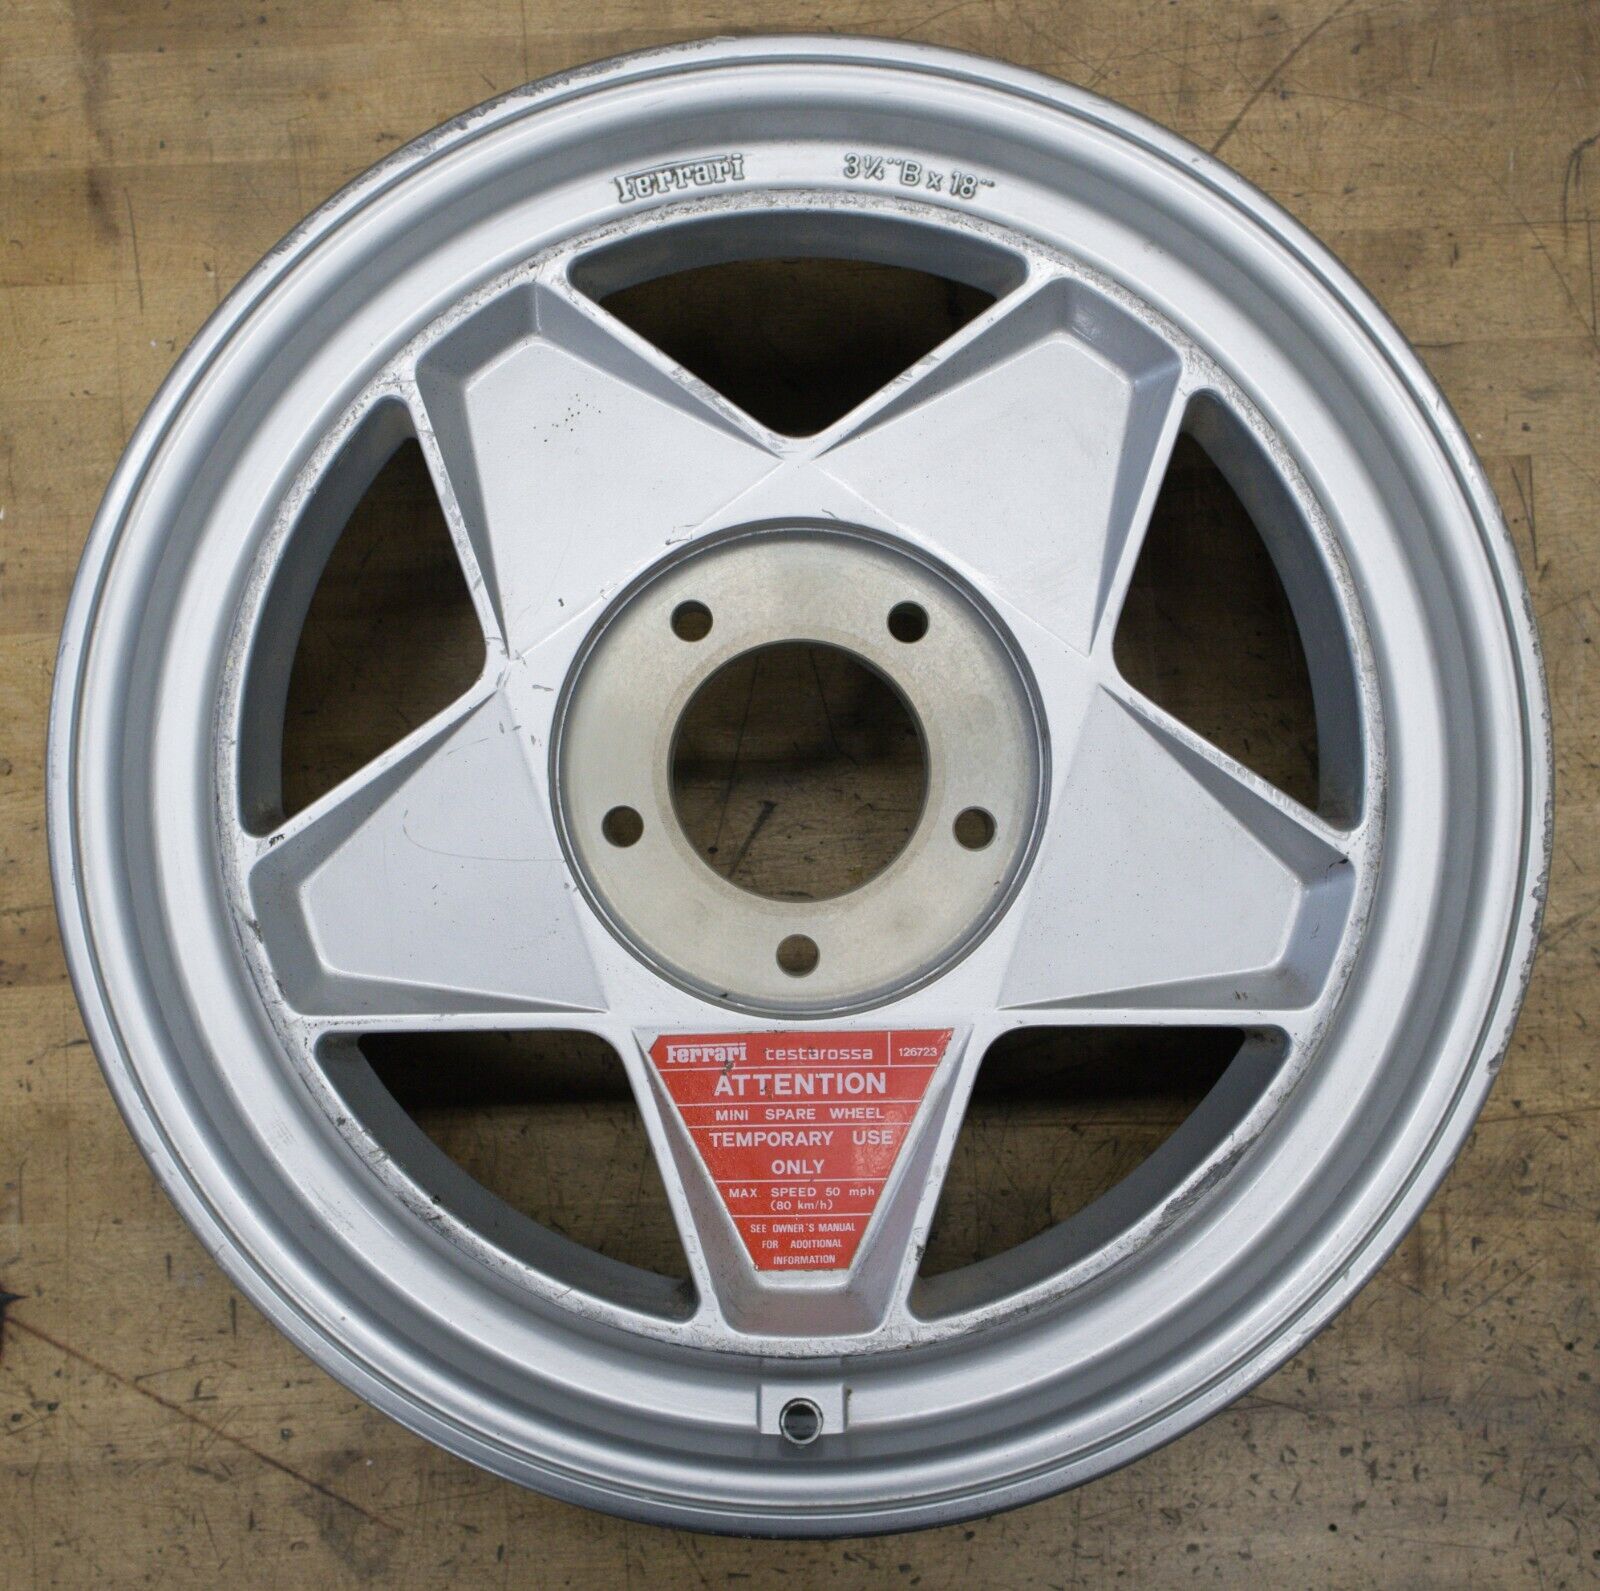 86-88 Ferrari Testarossa space saver spare wheel tire monodado centerlock 124184